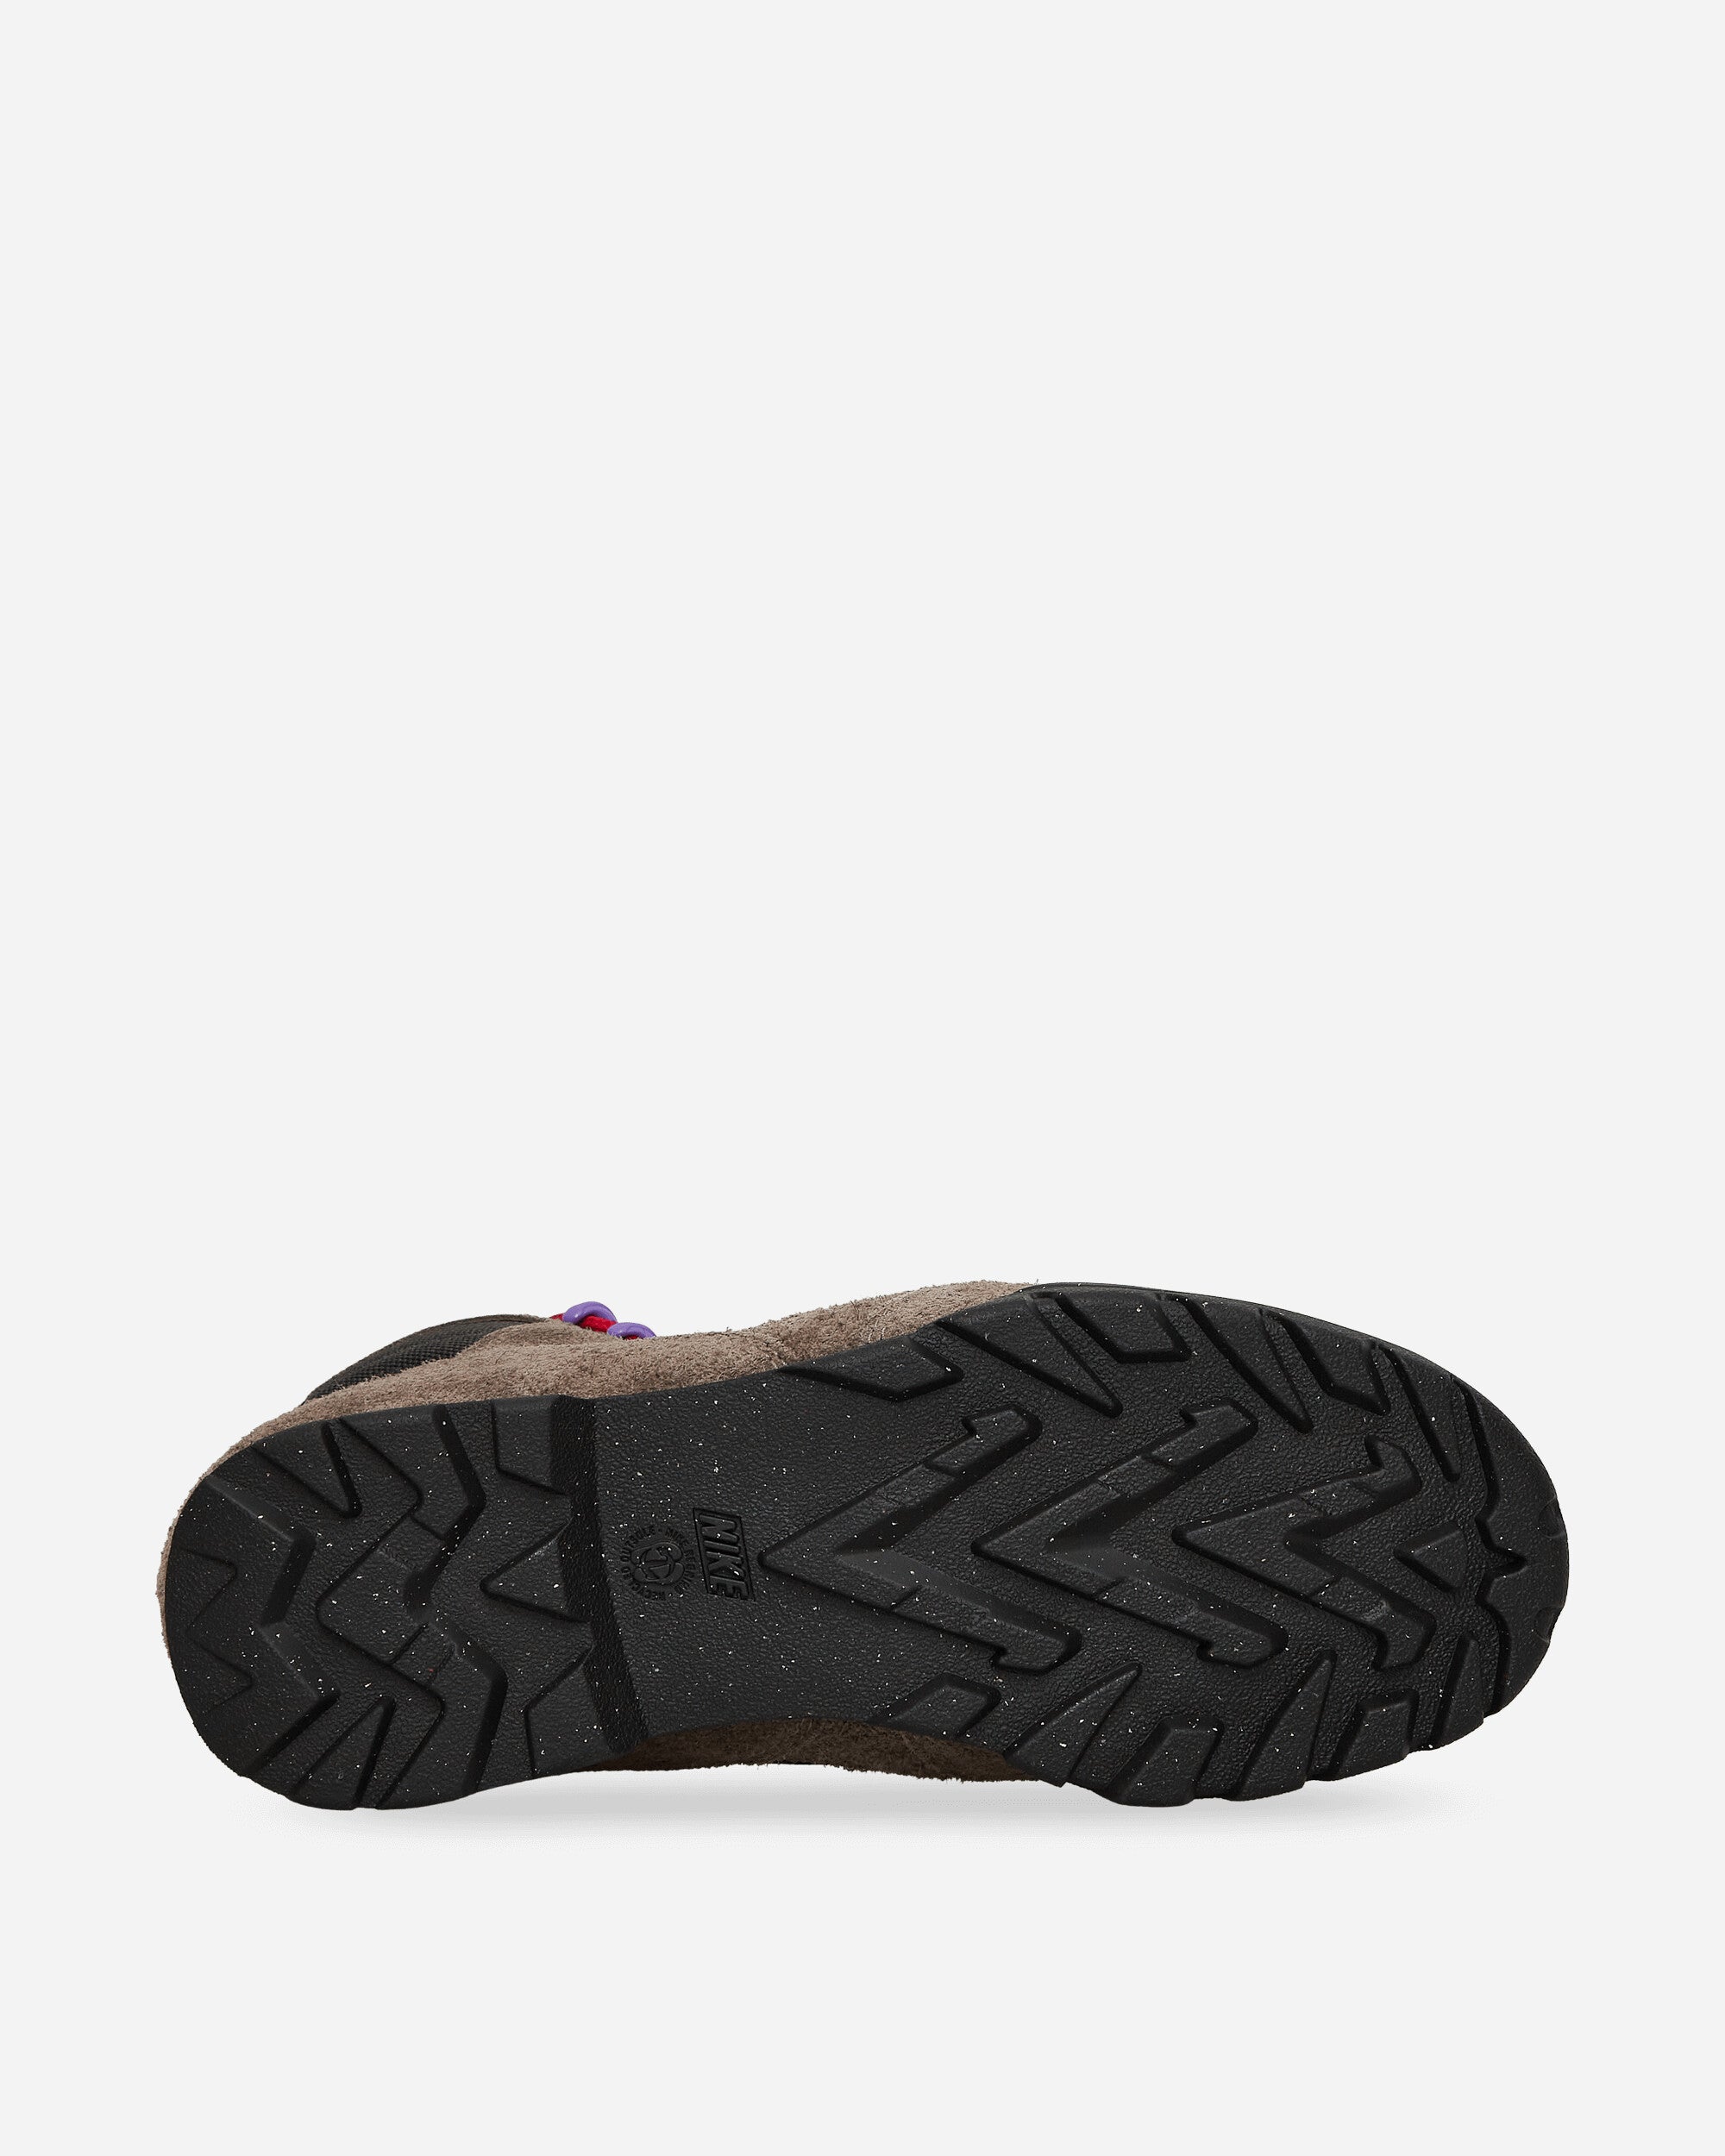 Nike Acg Torre Mid Wp Olive Grey/Black Sneakers Low FD0212-001